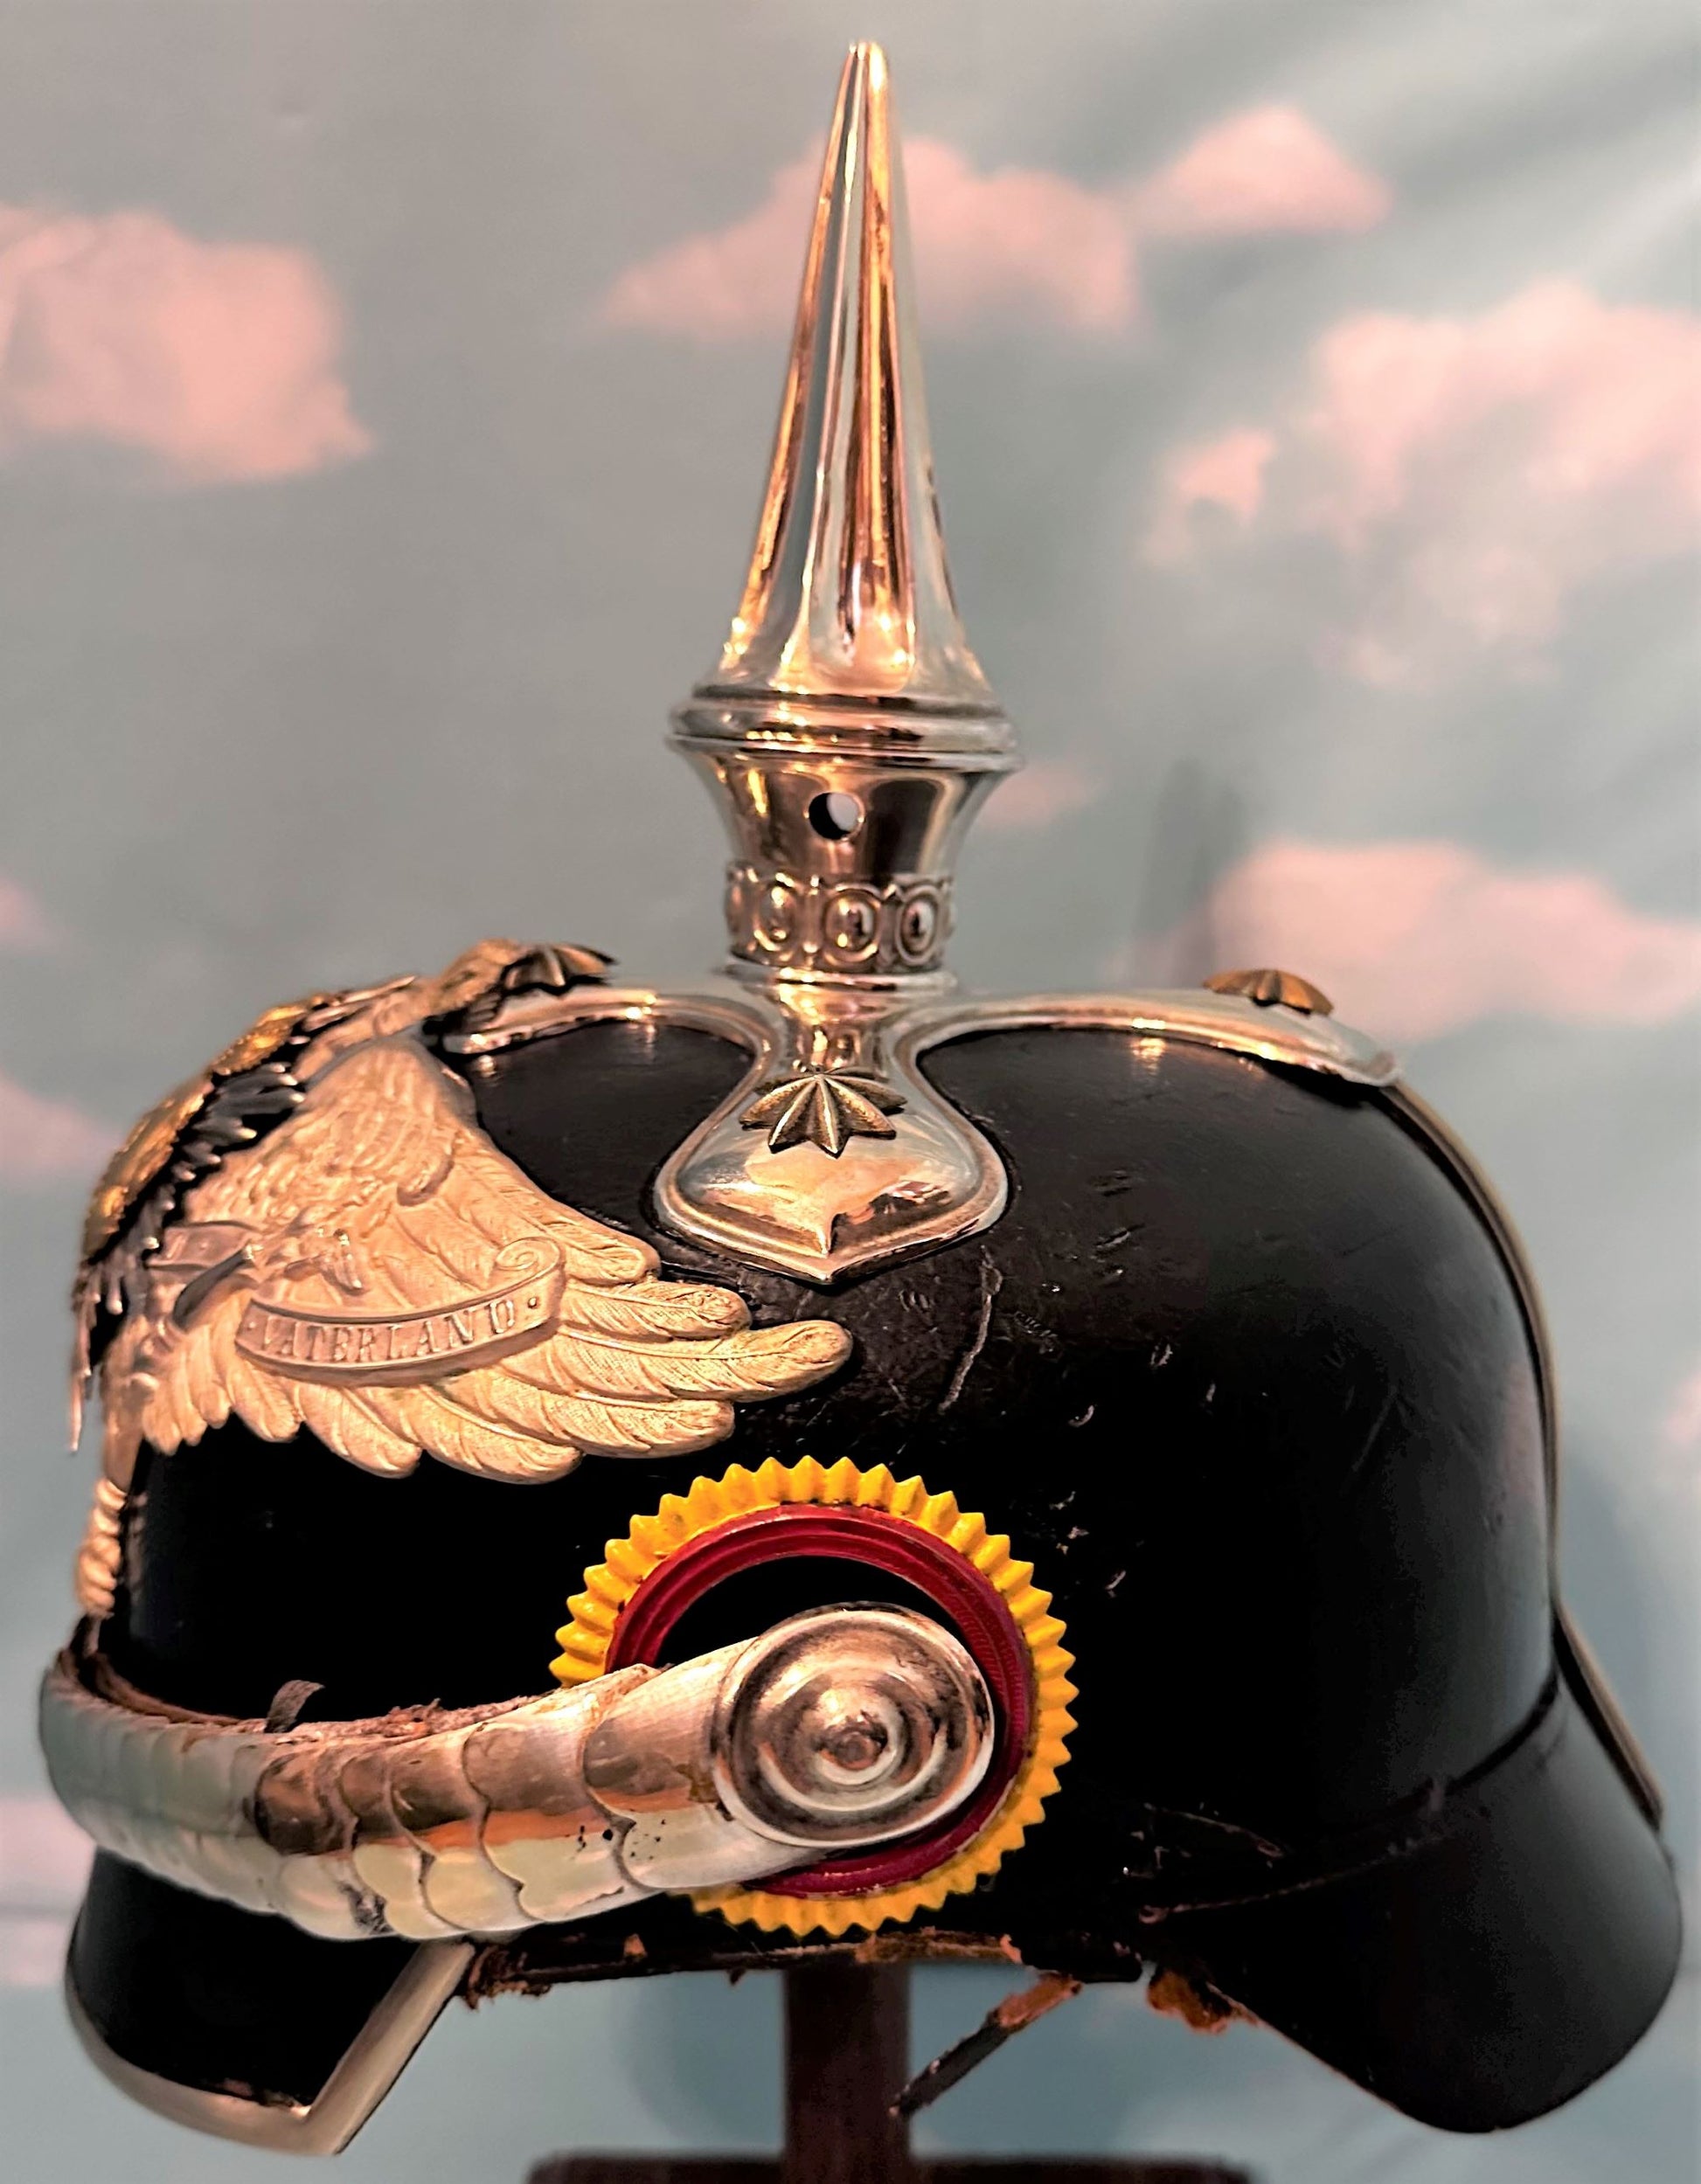 Reuss Pickelhaube / Spiked Helmet Flügel Adjutant to the Younger Reuss prince - Derrittmeister Militaria Group